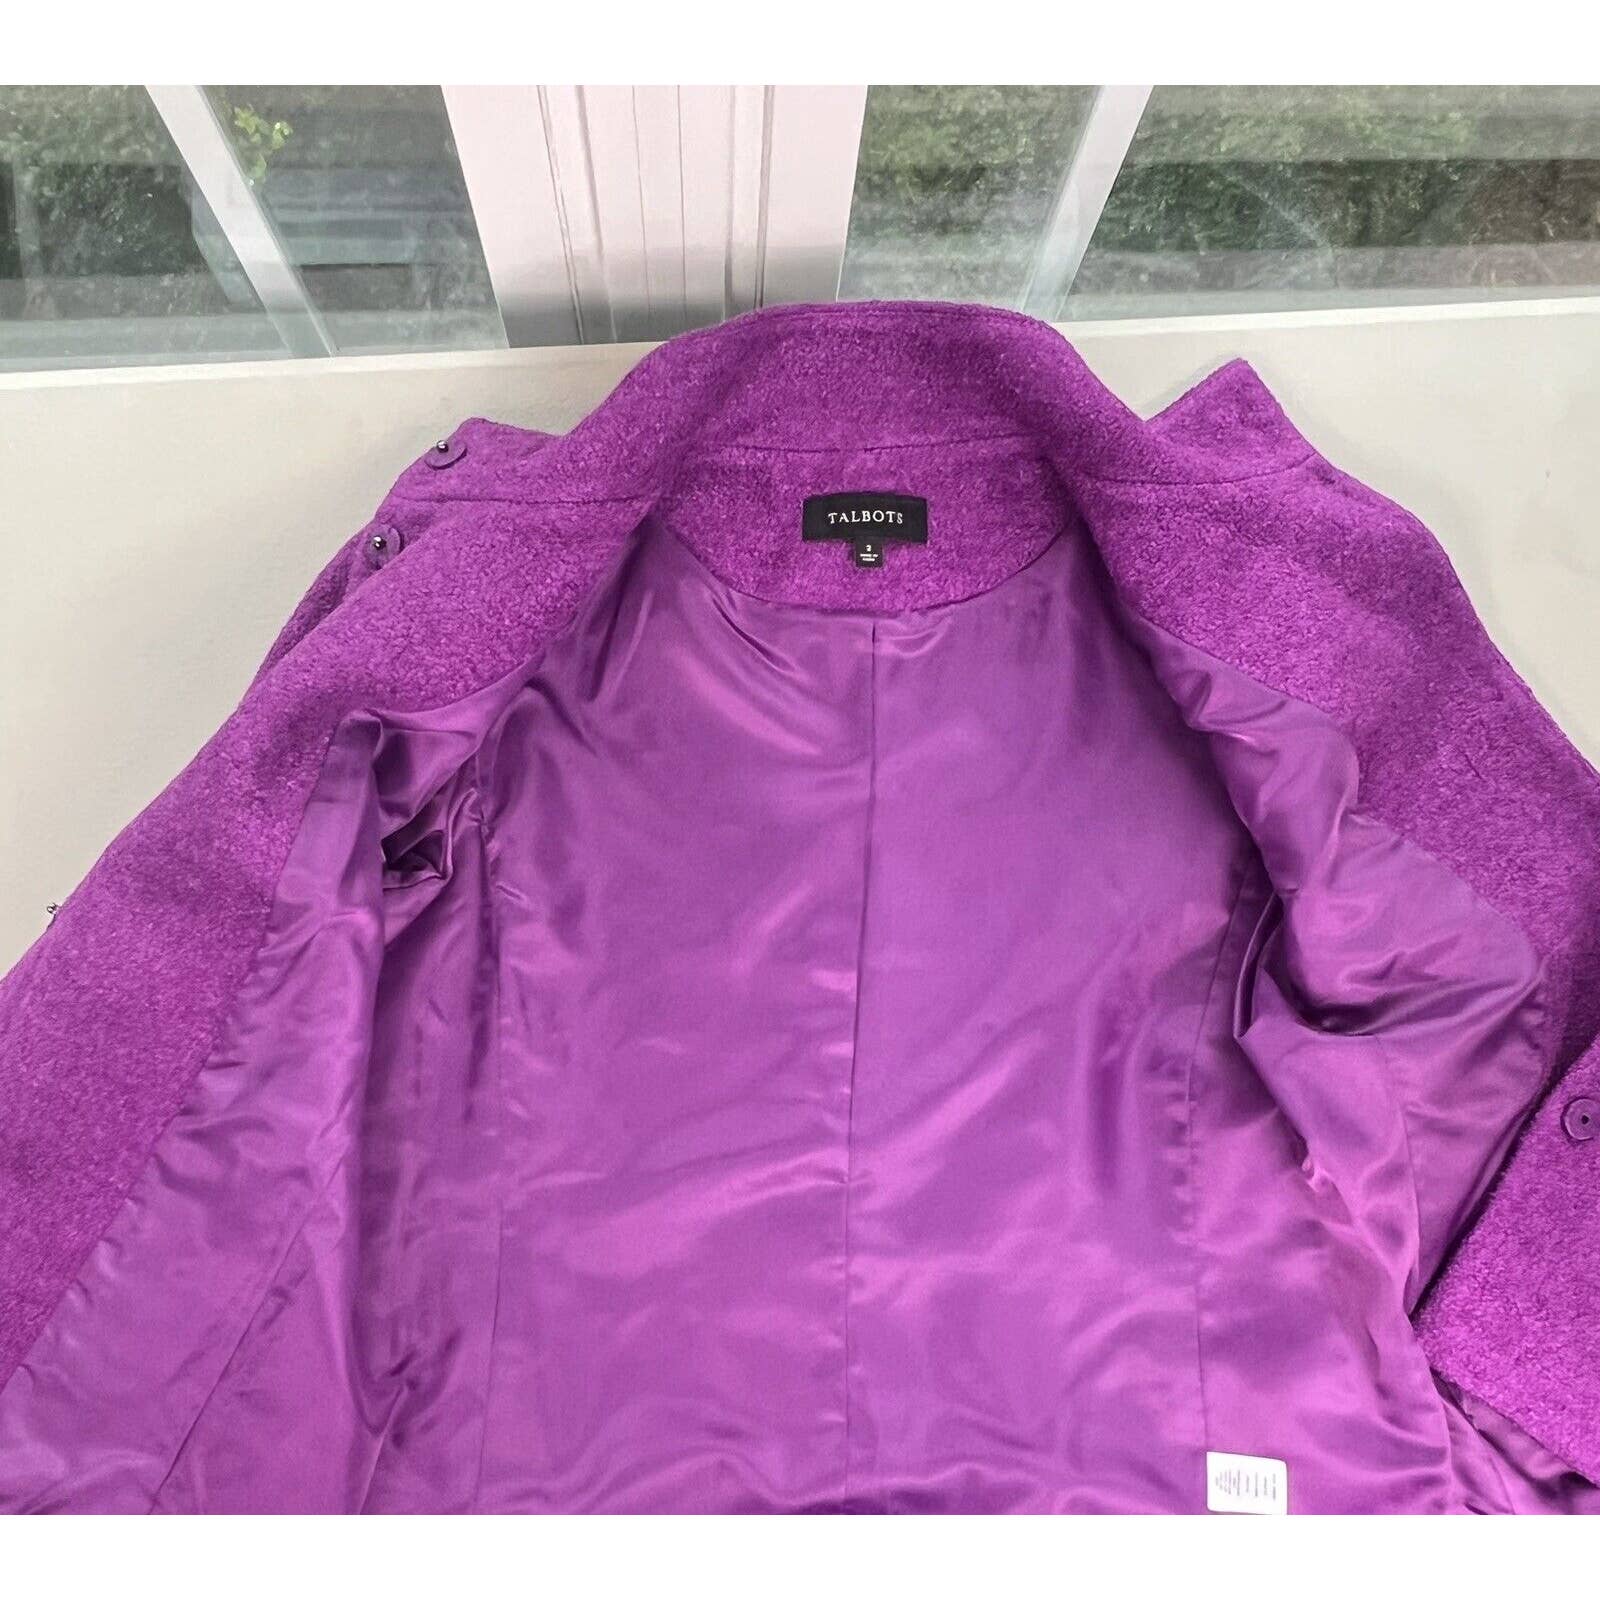 Talbots Boiled Wool Blend Jacket Women’s Size 2 Button Up Cardigan Blazer